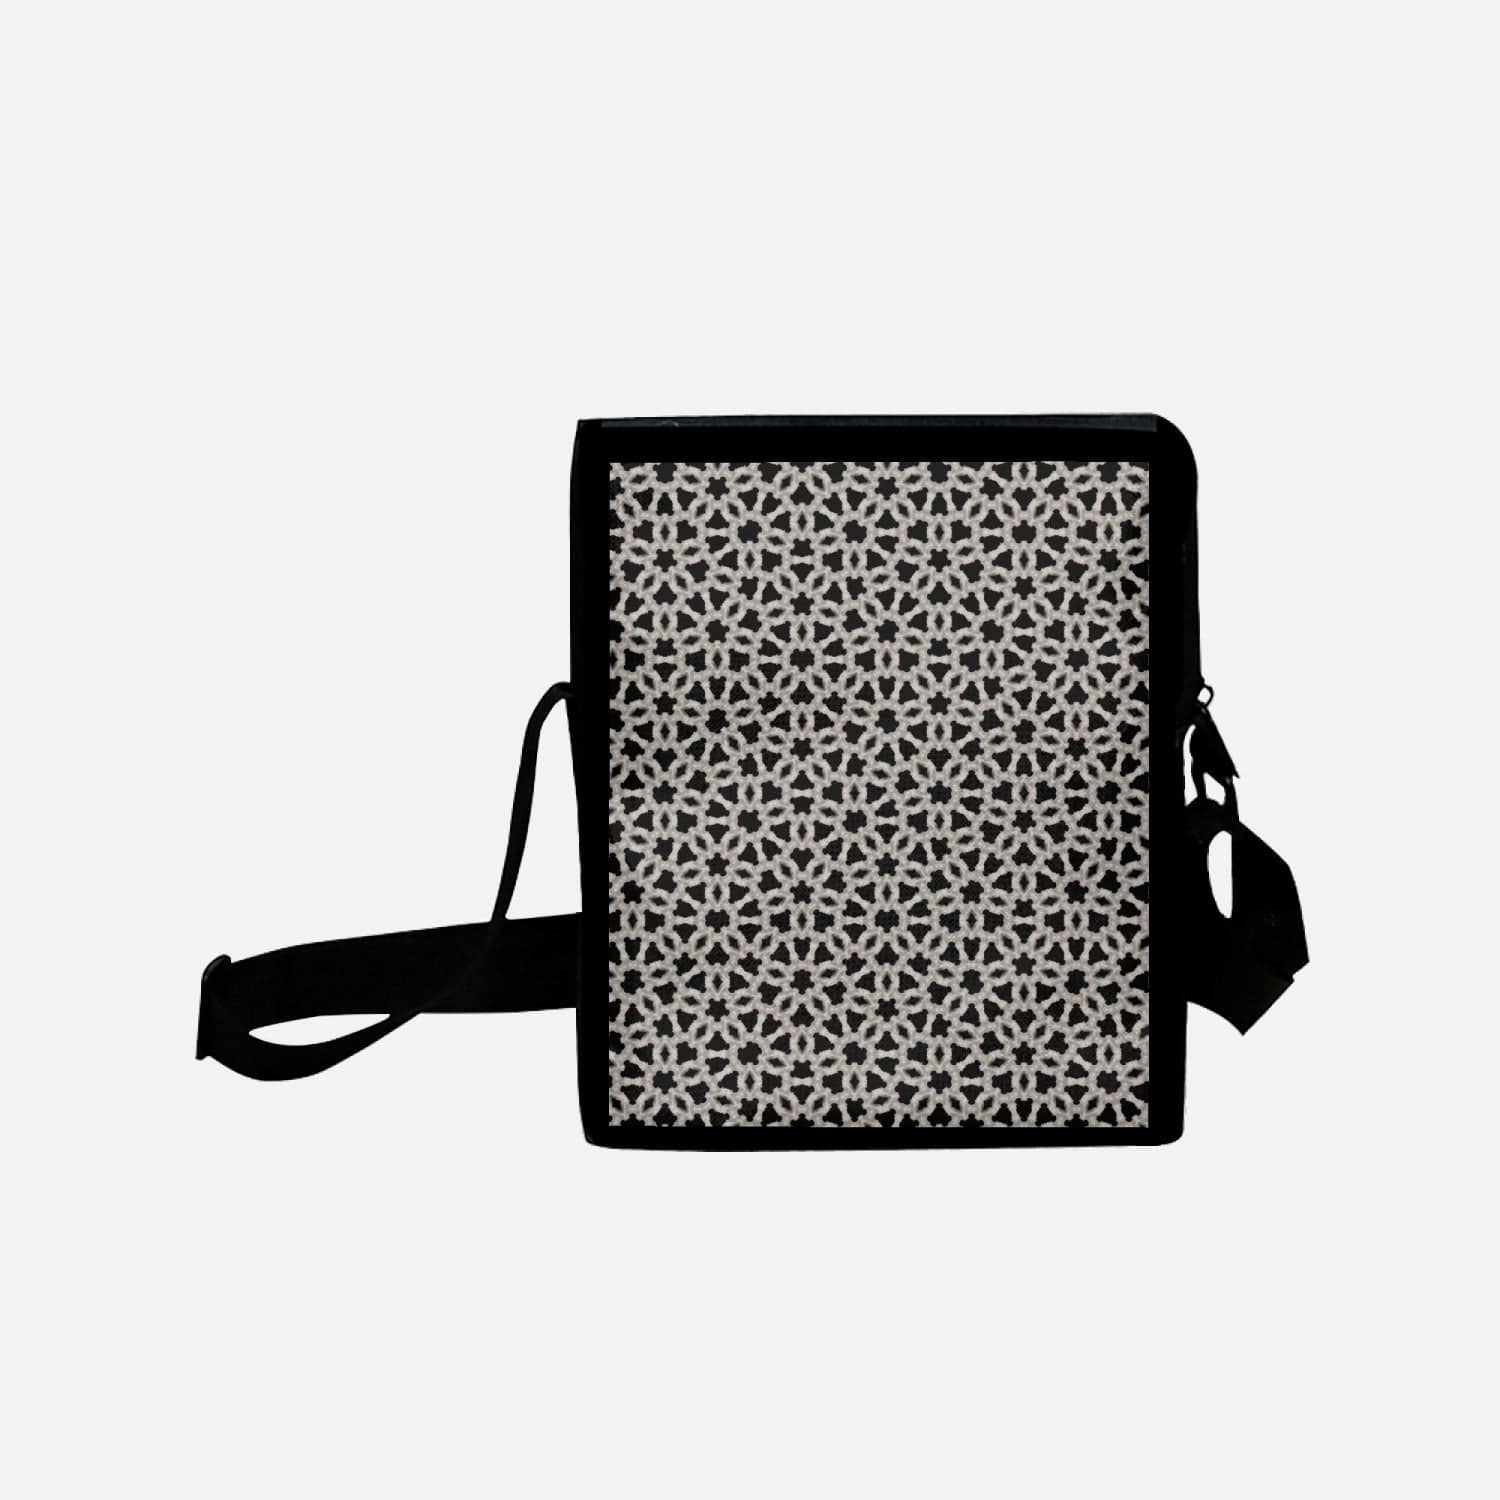 Moon rose. Oxford Bags  Stylish Backpack Set 3pcs, designed by Sensus Studio Design